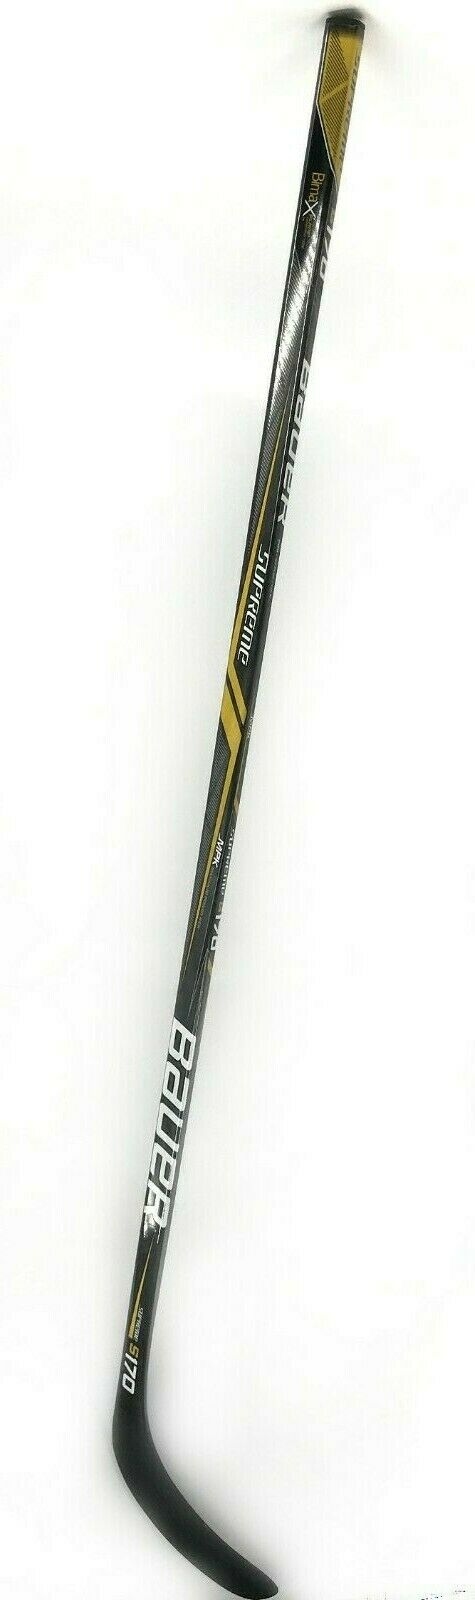 Bauer Supreme S170 JR. Ice Hockey Stick 87 Flex Grip Kane P88 RH #Z62